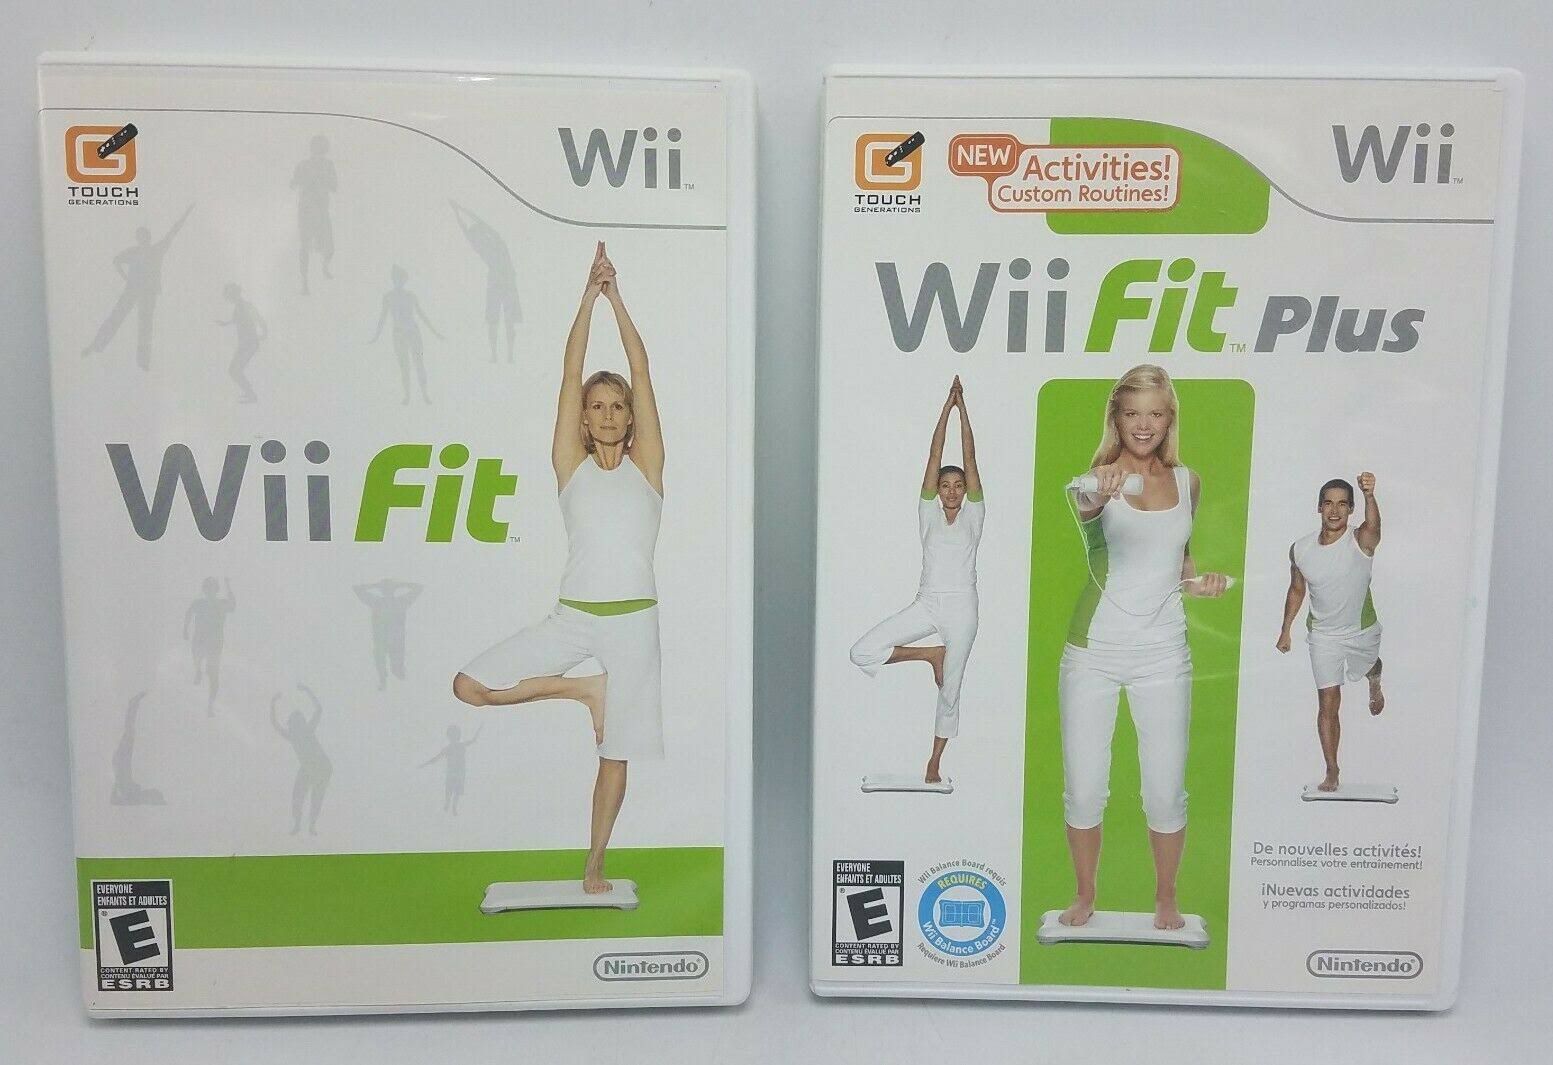 Wii Fit Plus - Nintendo Wii